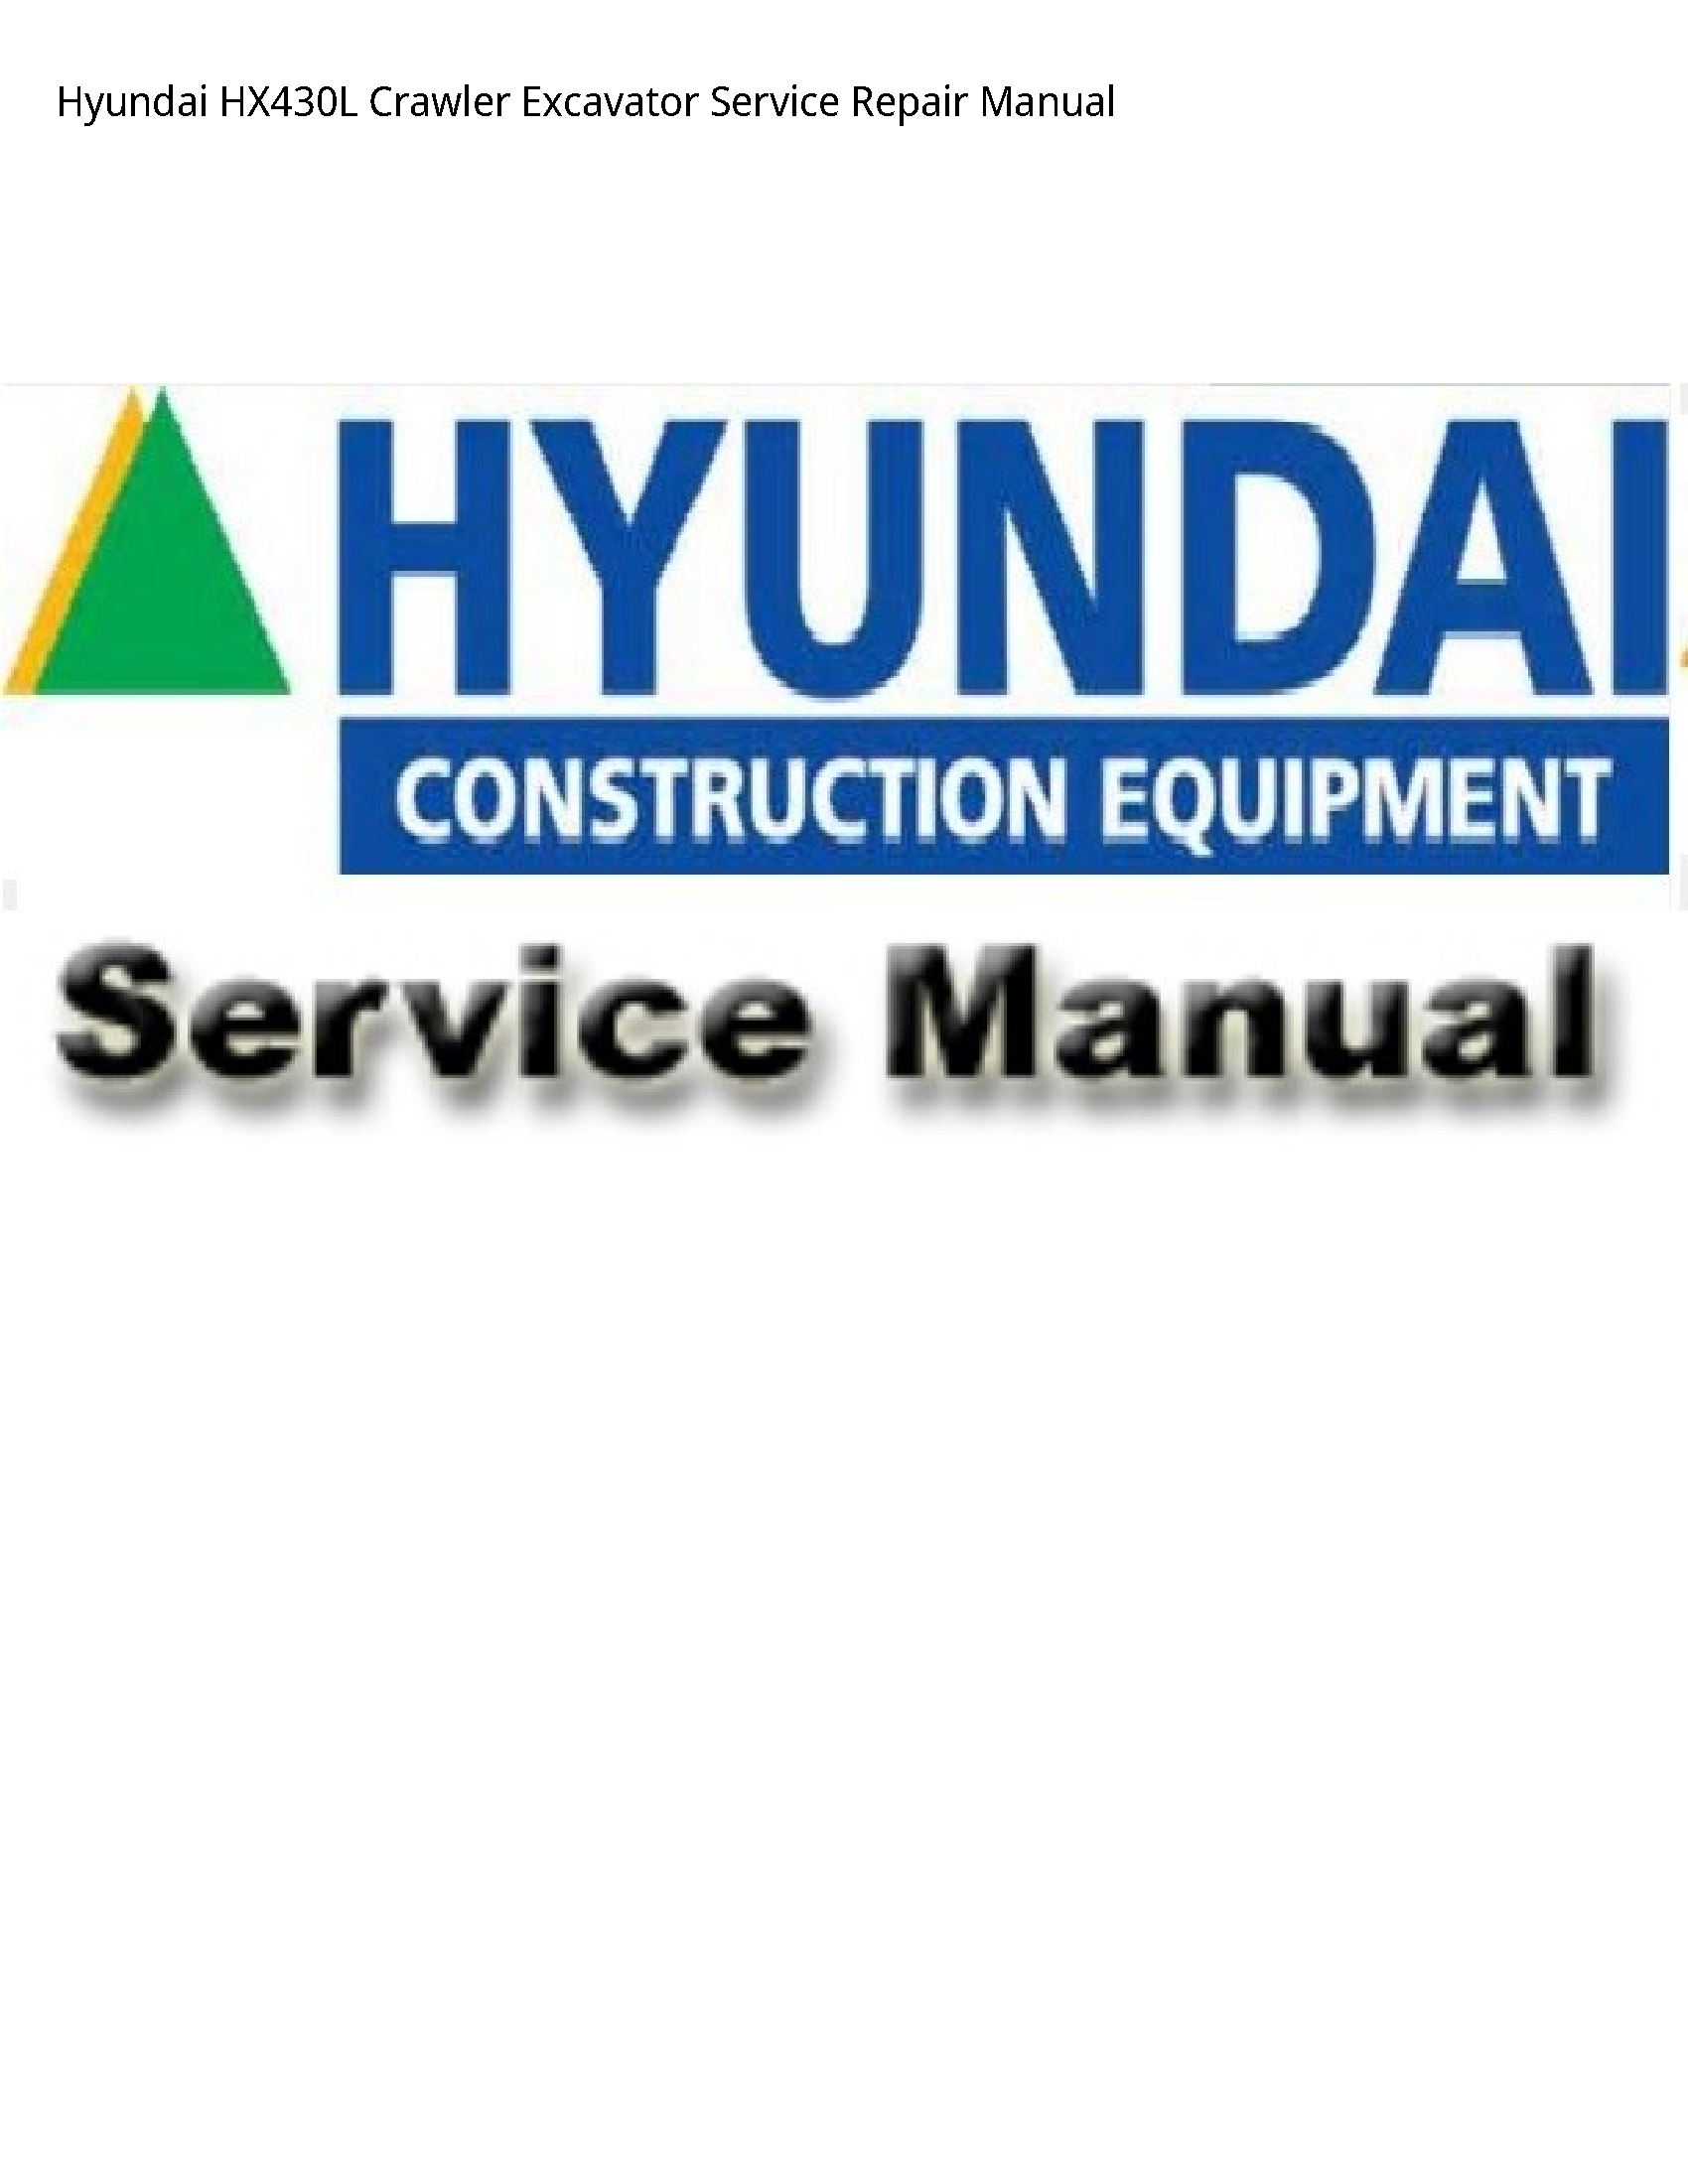 Hyundai HX430L Crawler Excavator manual